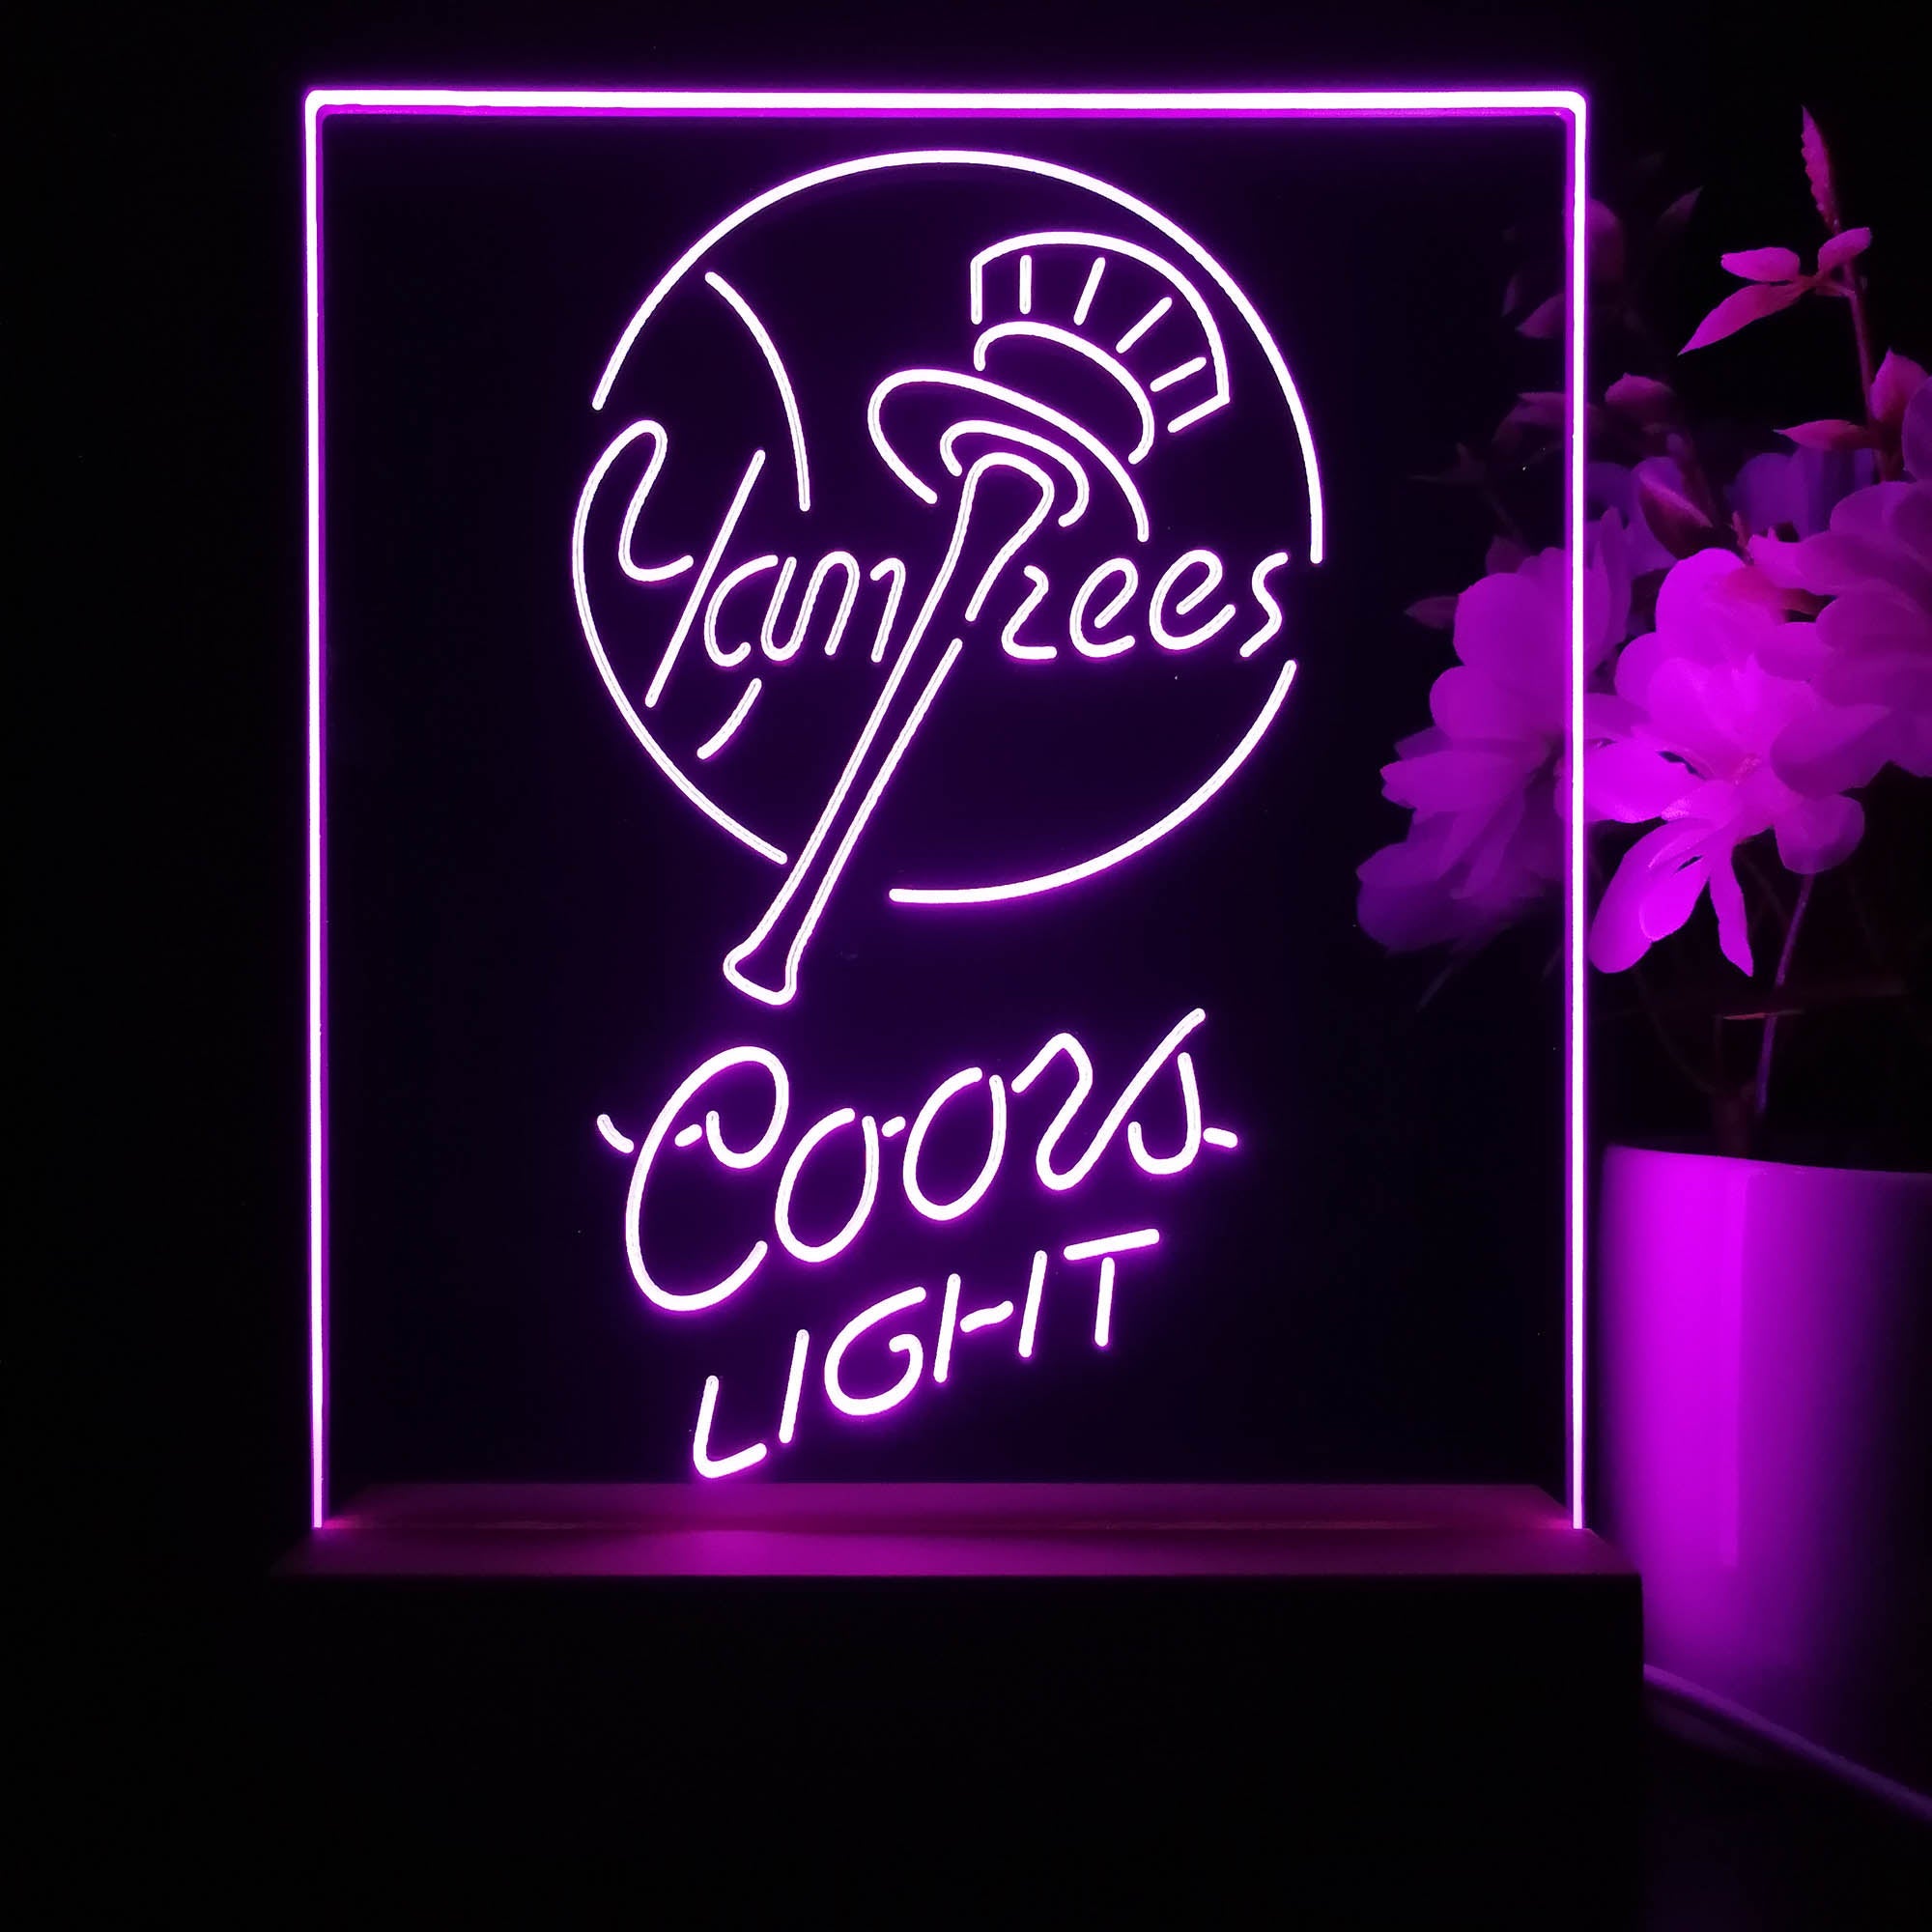 New York Yankees Coors Light Neon Sign Pub Bar Lamp